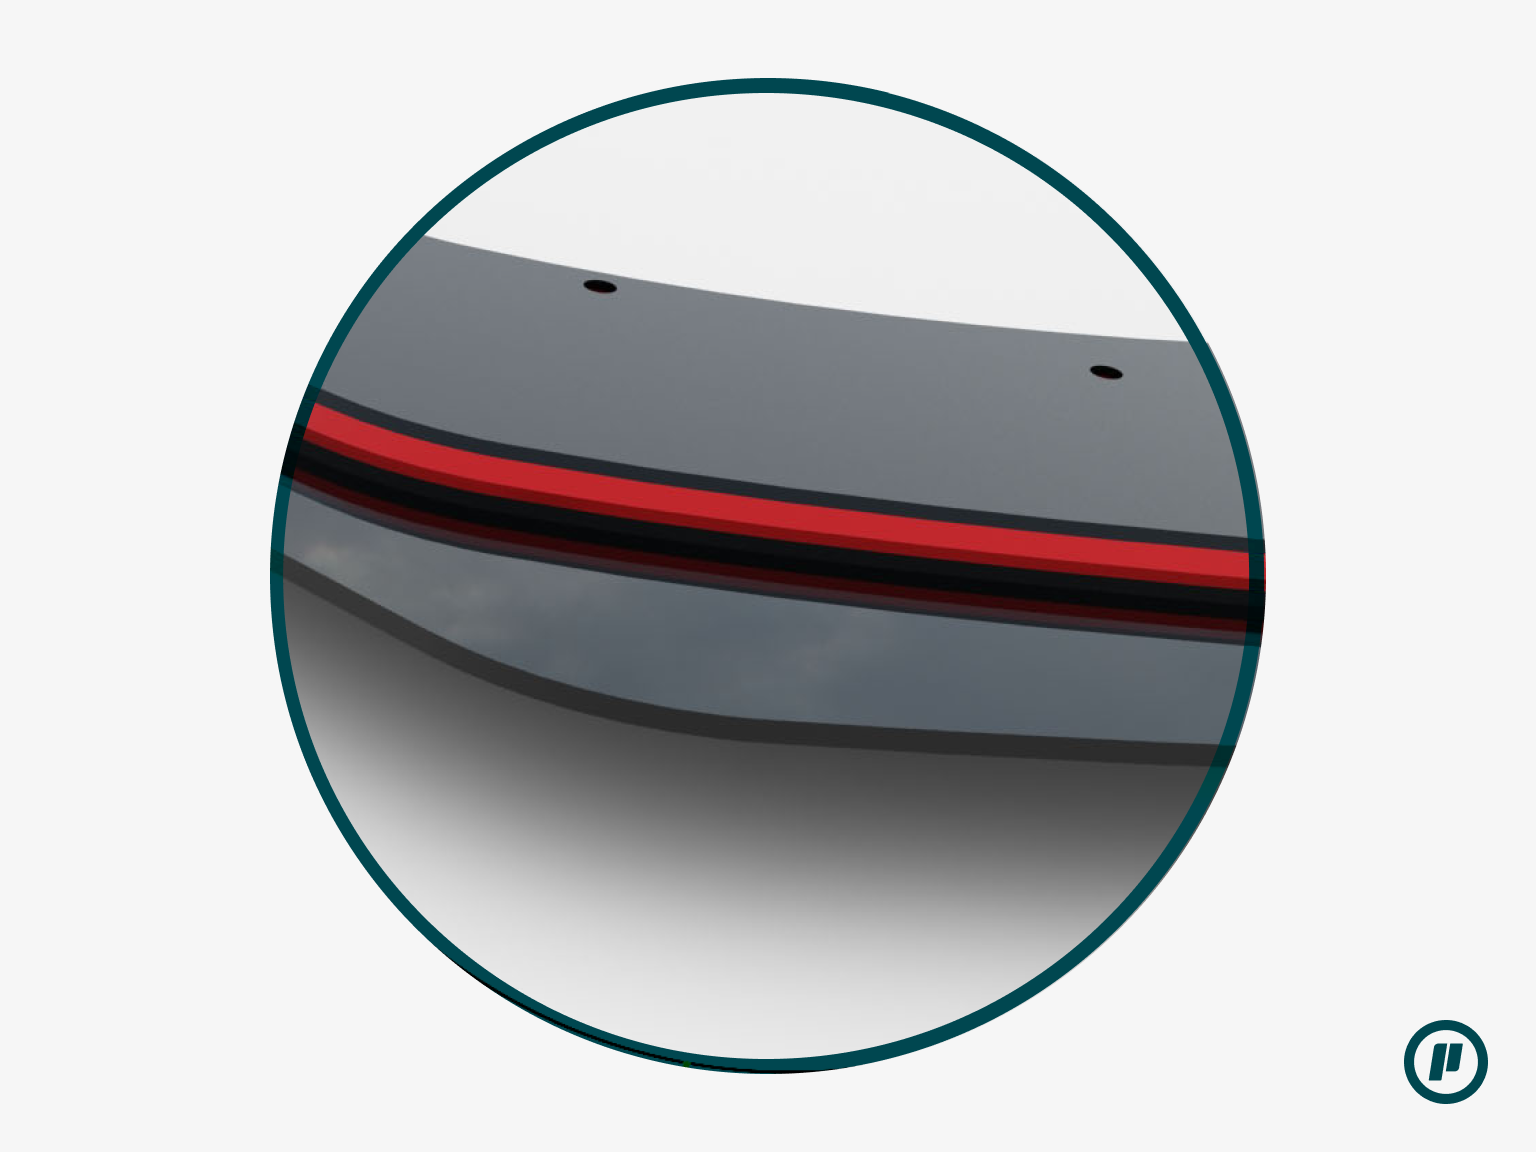 Maxton Design - Street Pro Front Splitter + Flaps for Honda Civic Type-R (MK11 2023+)